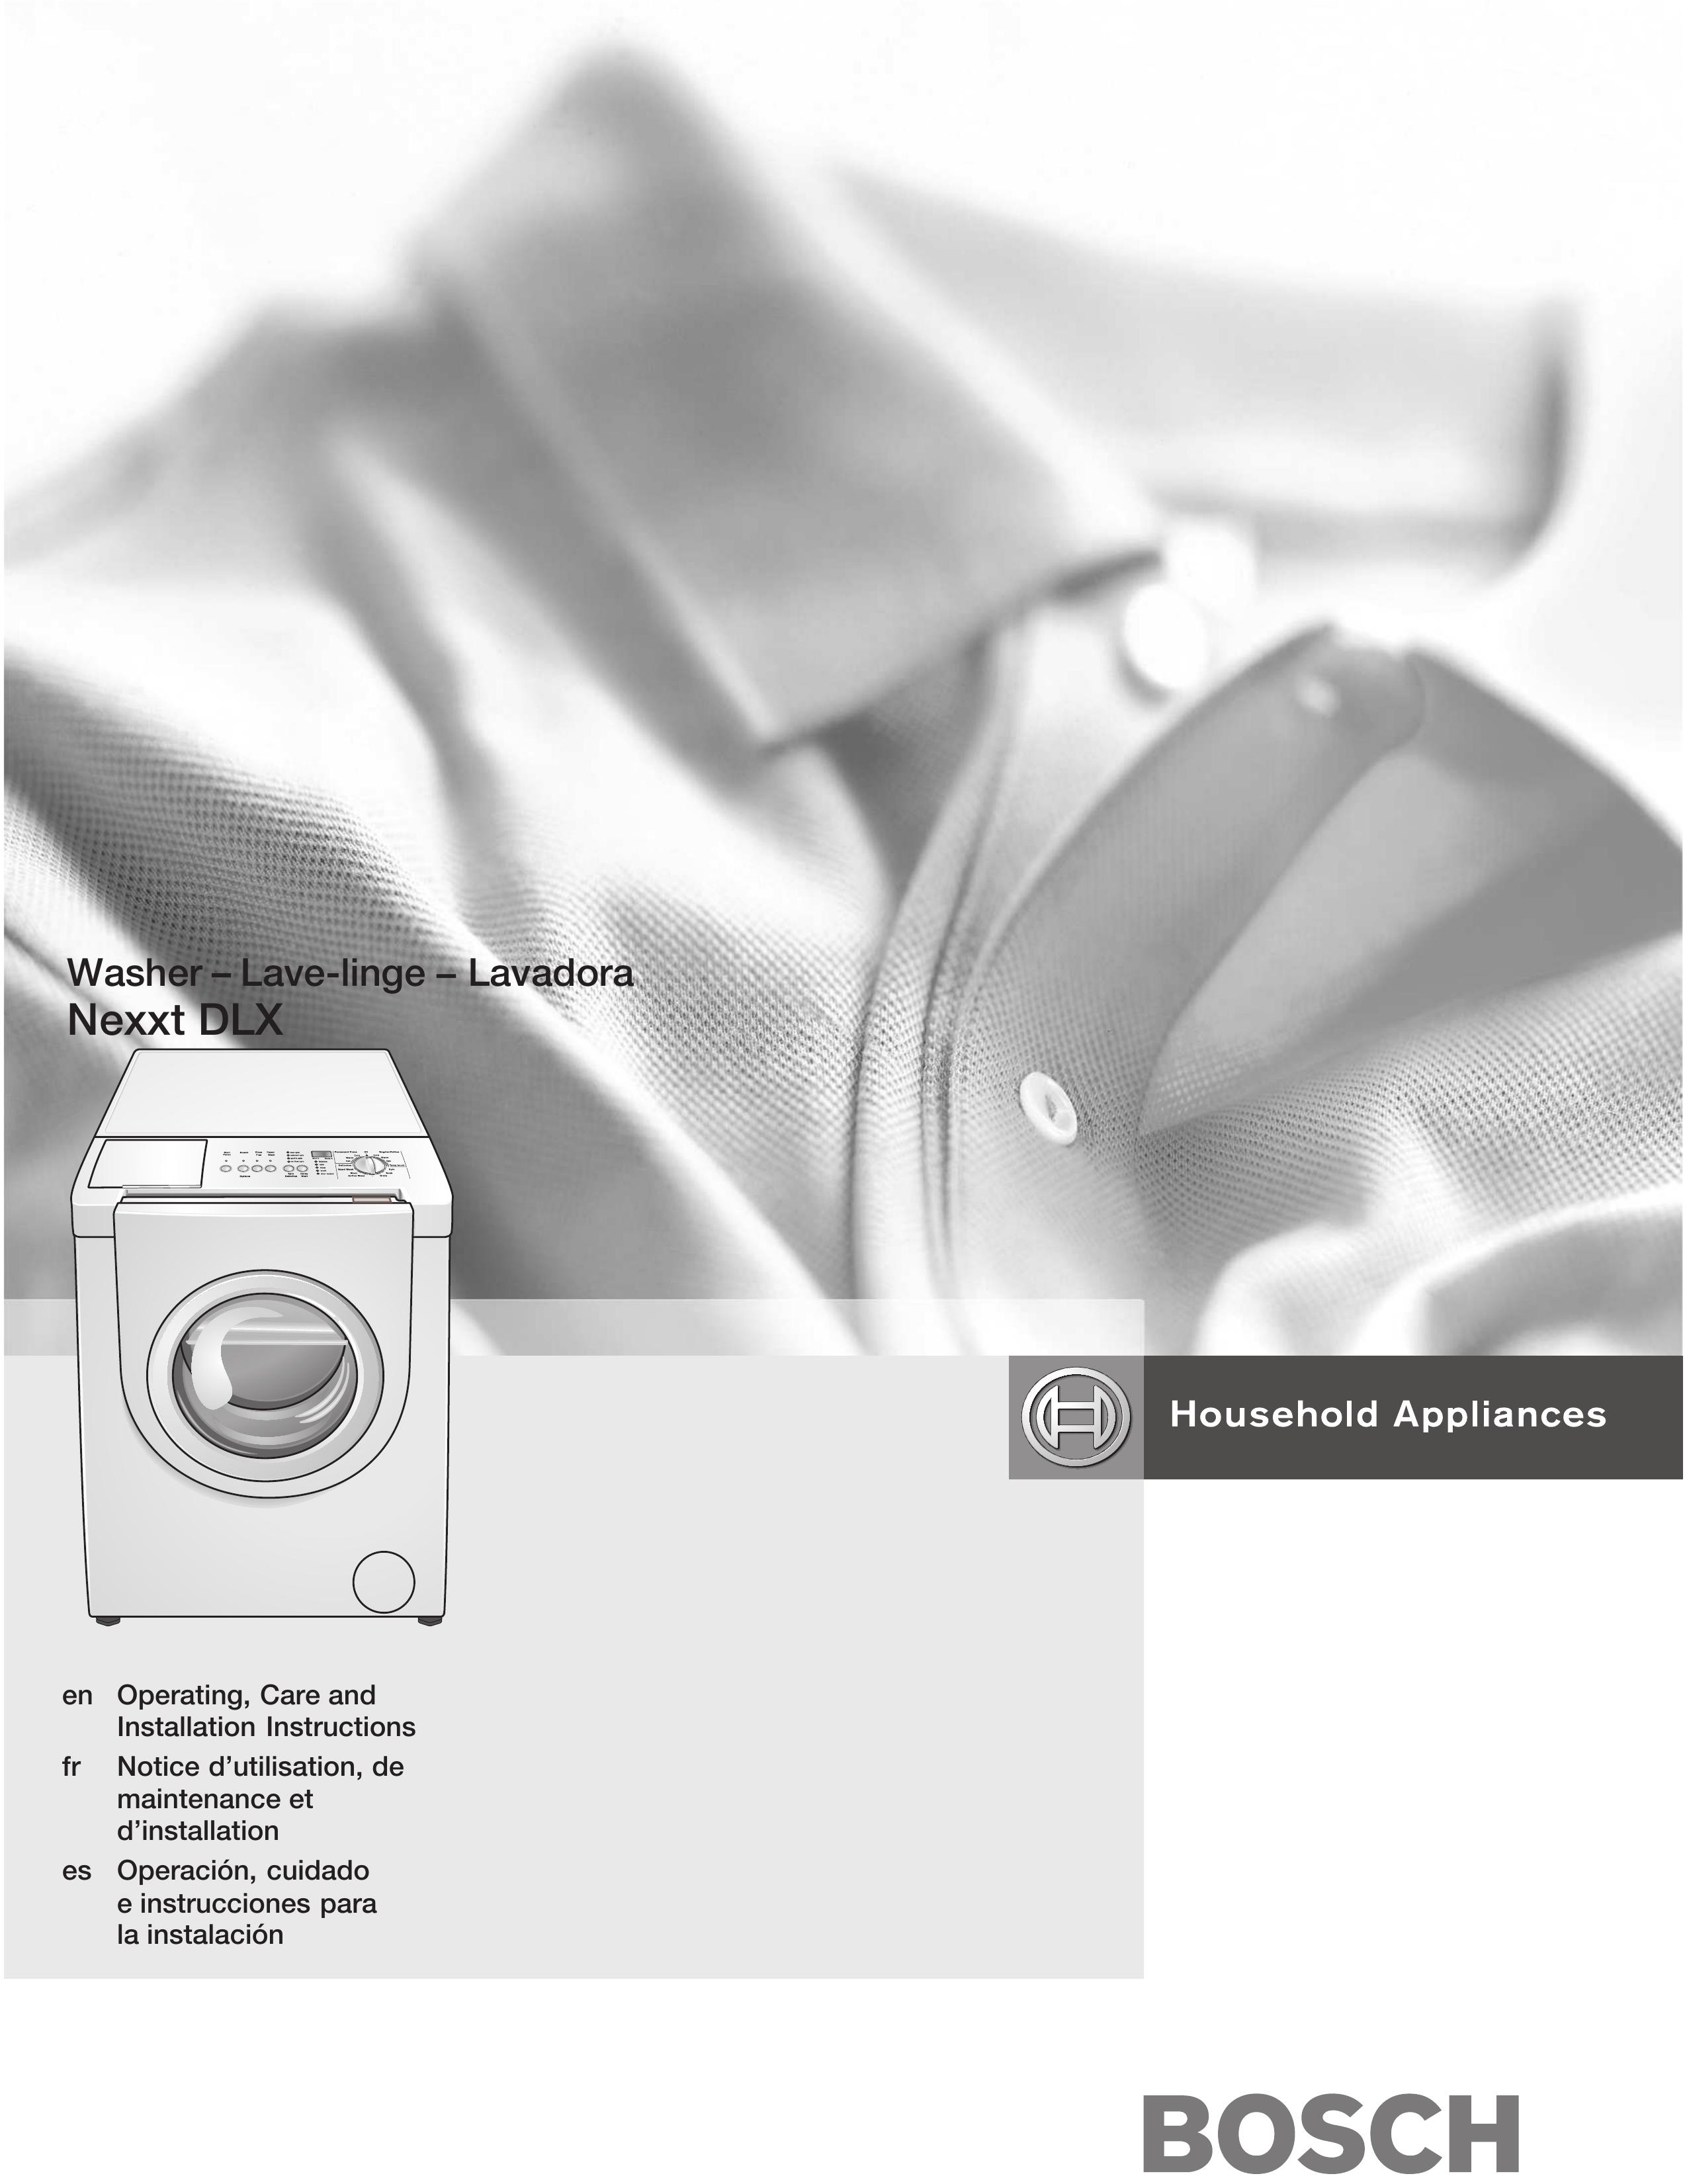 Bosch Appliances Nexxt DLX Washer User Manual